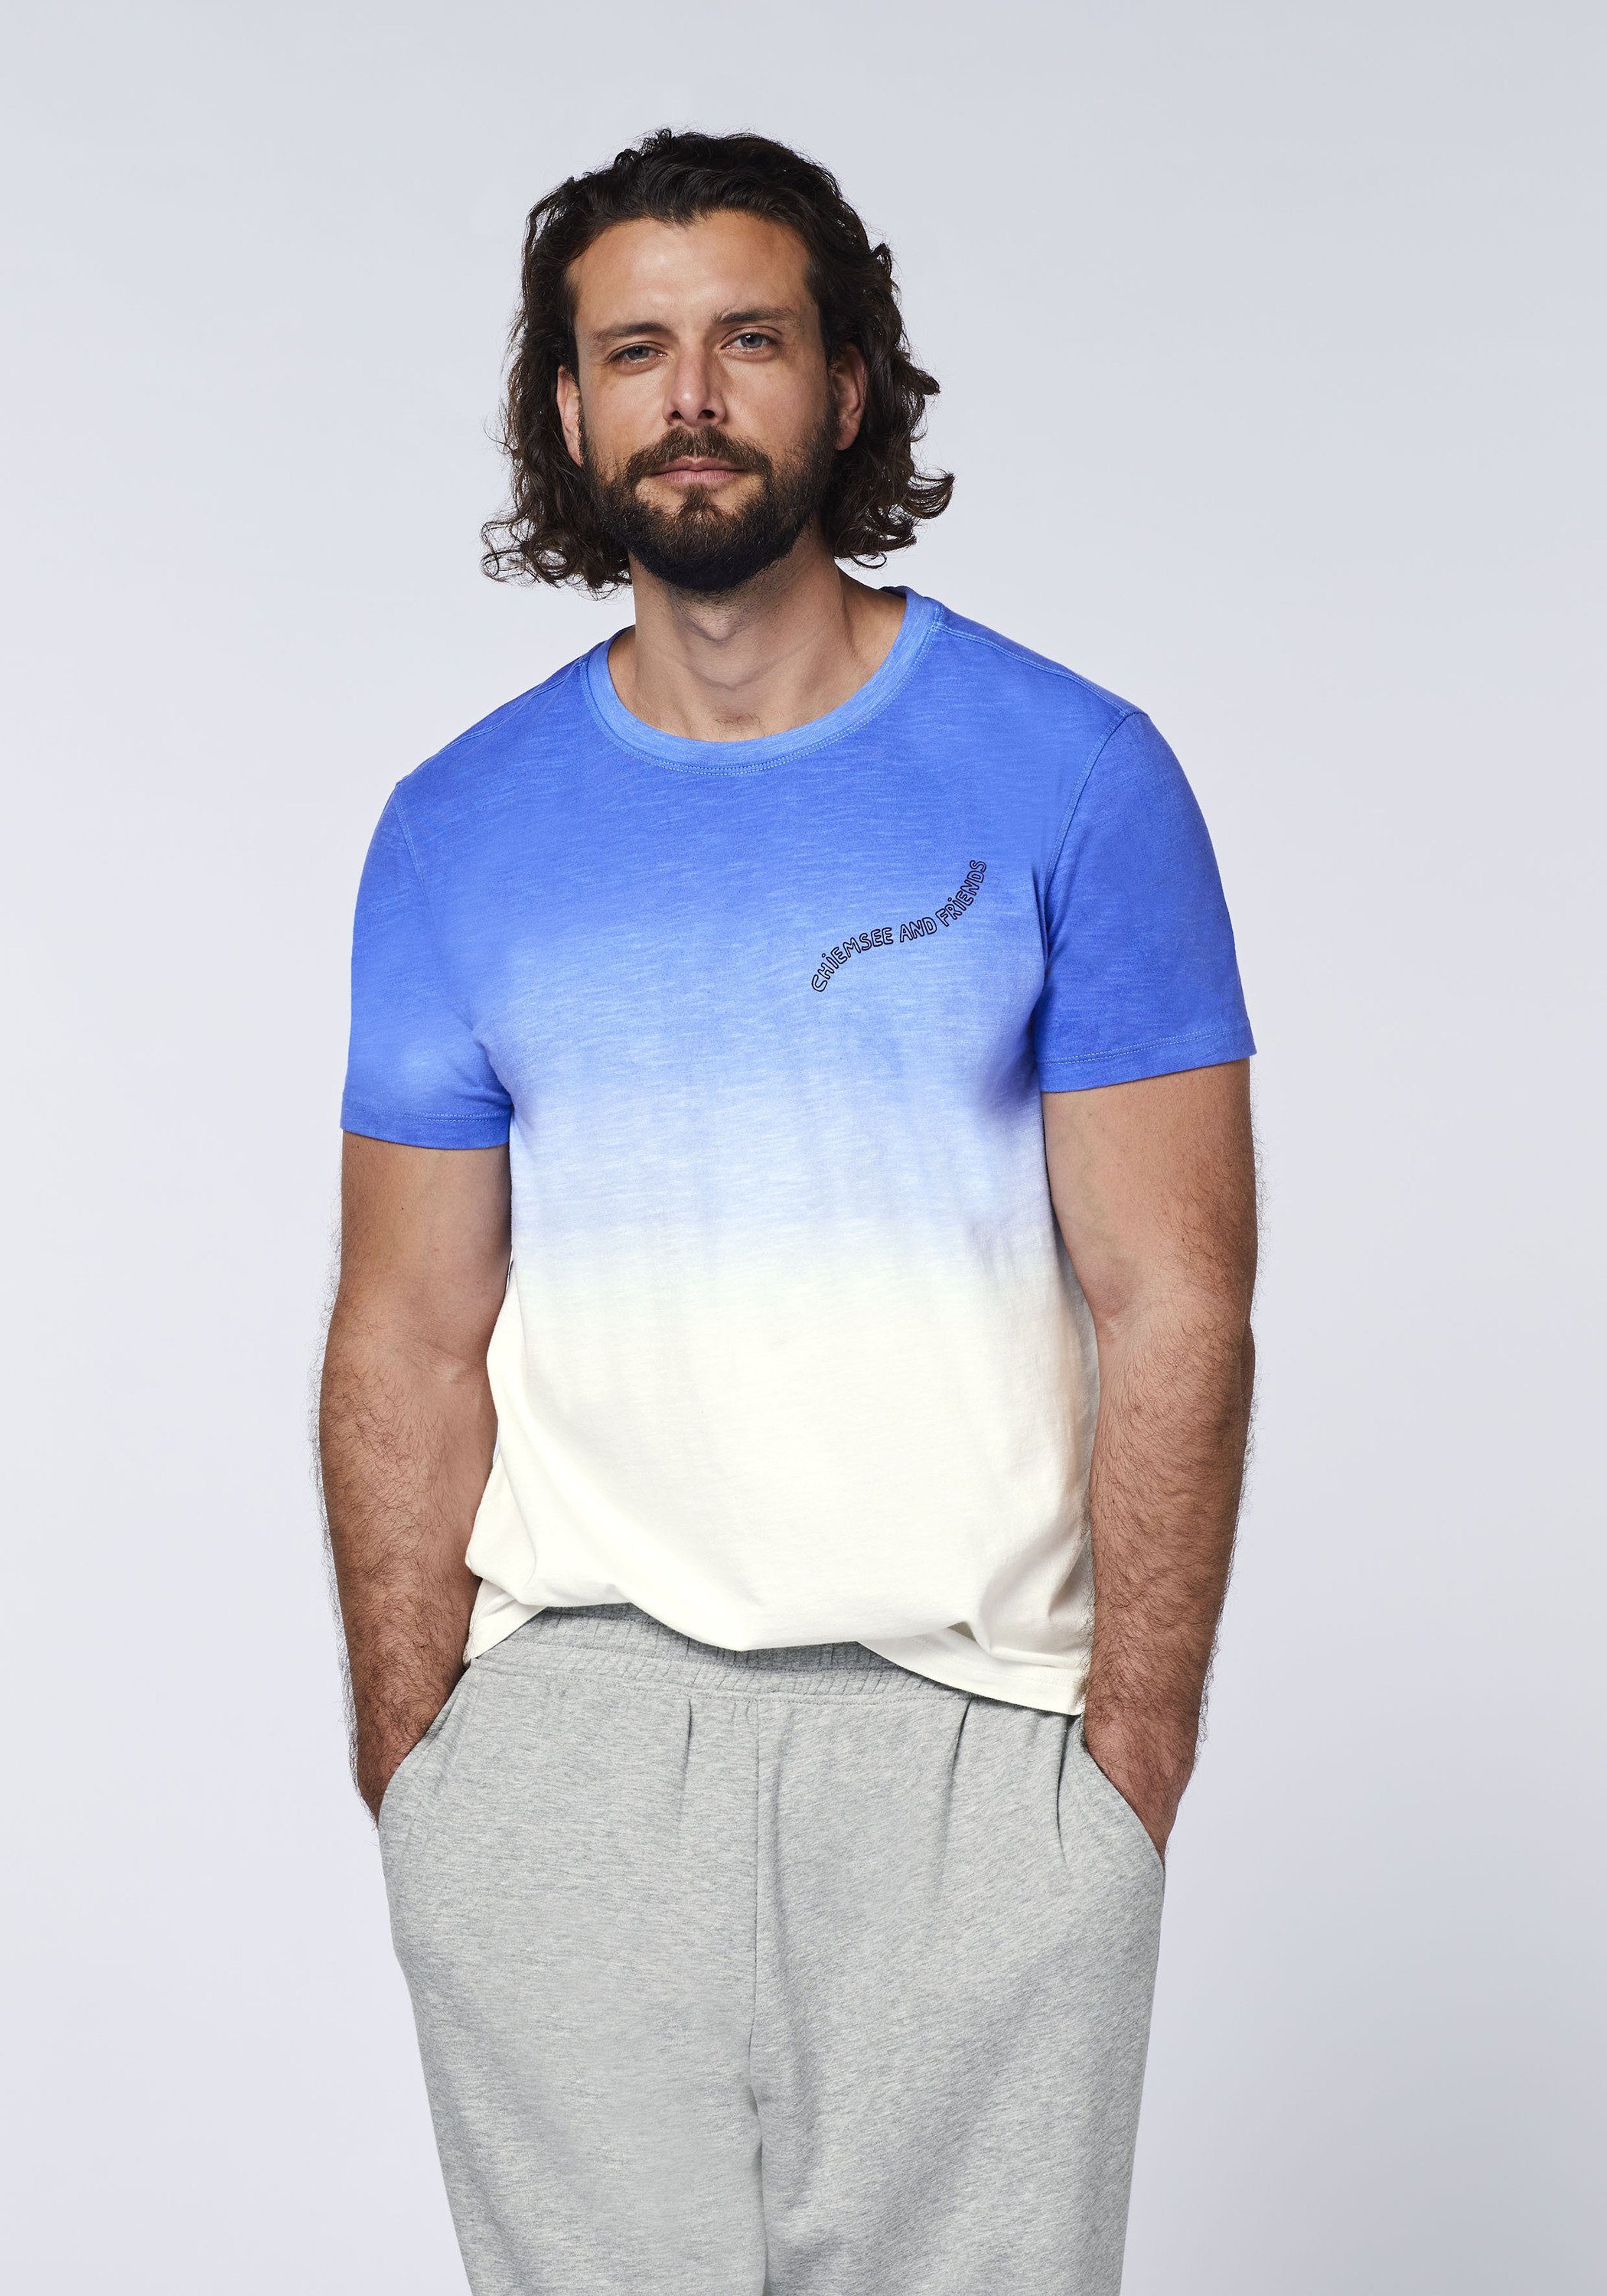 mit Chiemsee 1 4548 Blue im Blue/Dark Print-Shirt Farbverlauf Slub-Yarn-Textur Medium T-Shirt